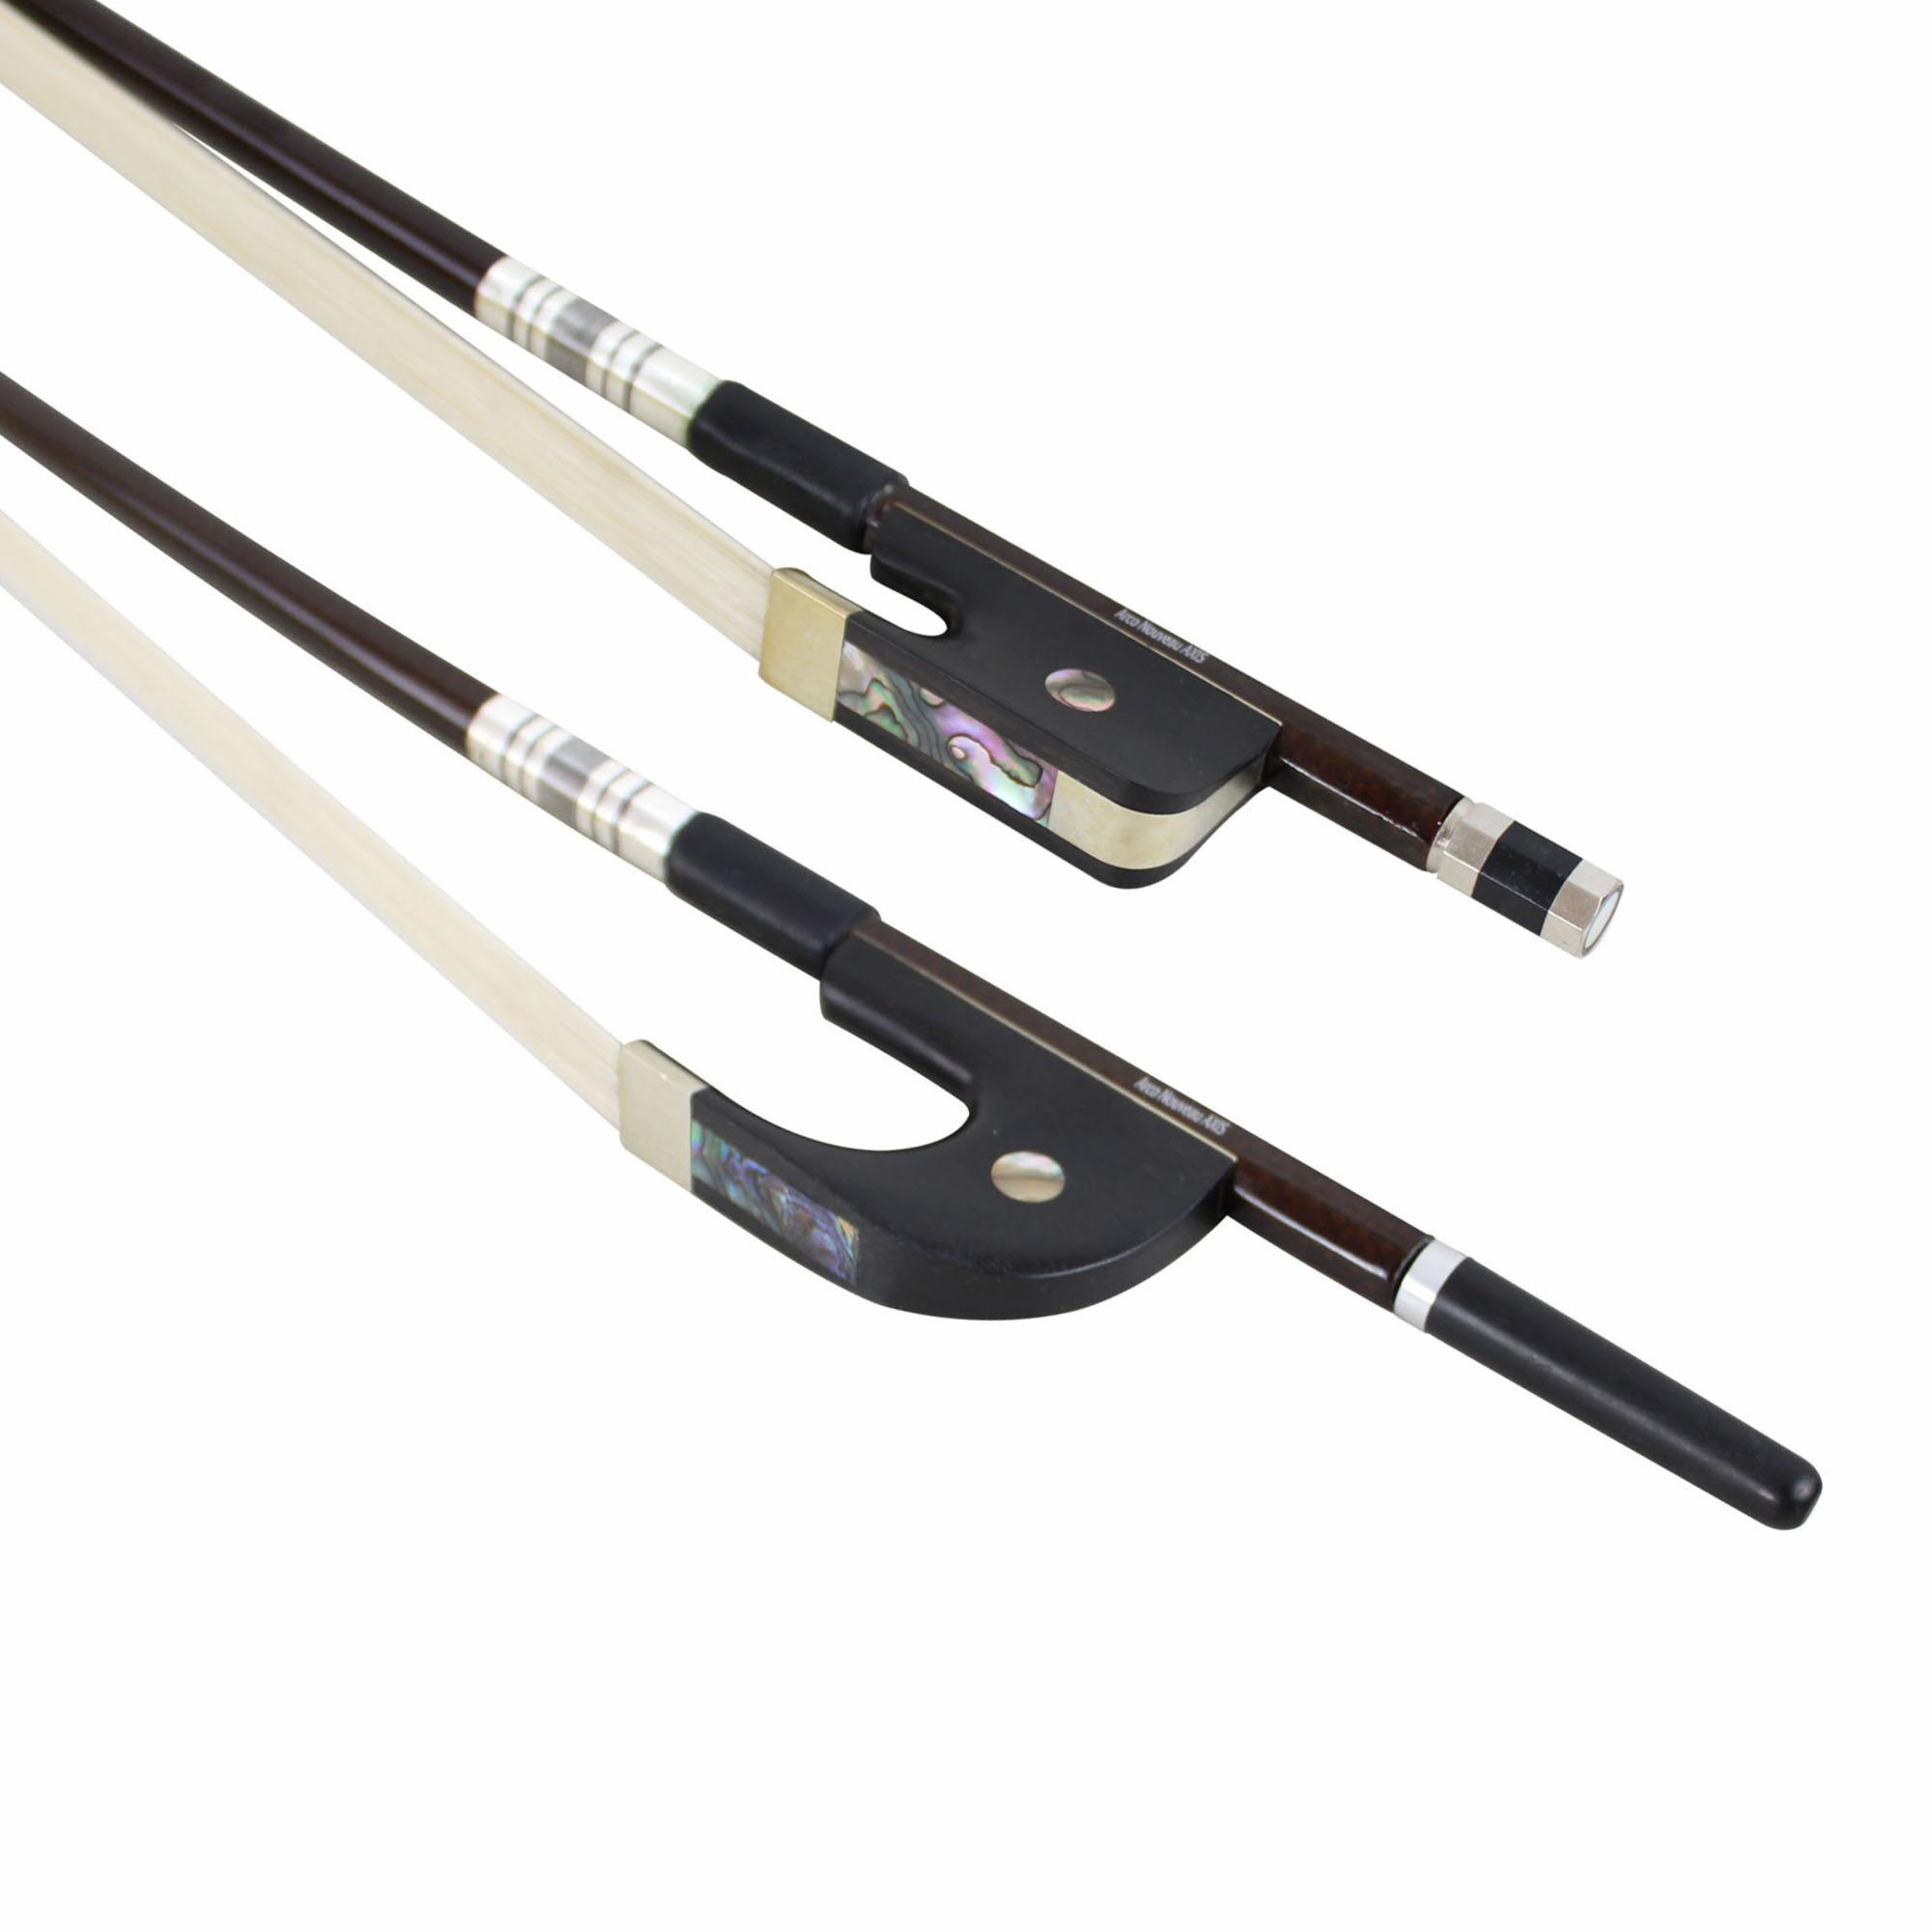 Arco Nouveau Axis Round Carbon Fiber Bass Bow